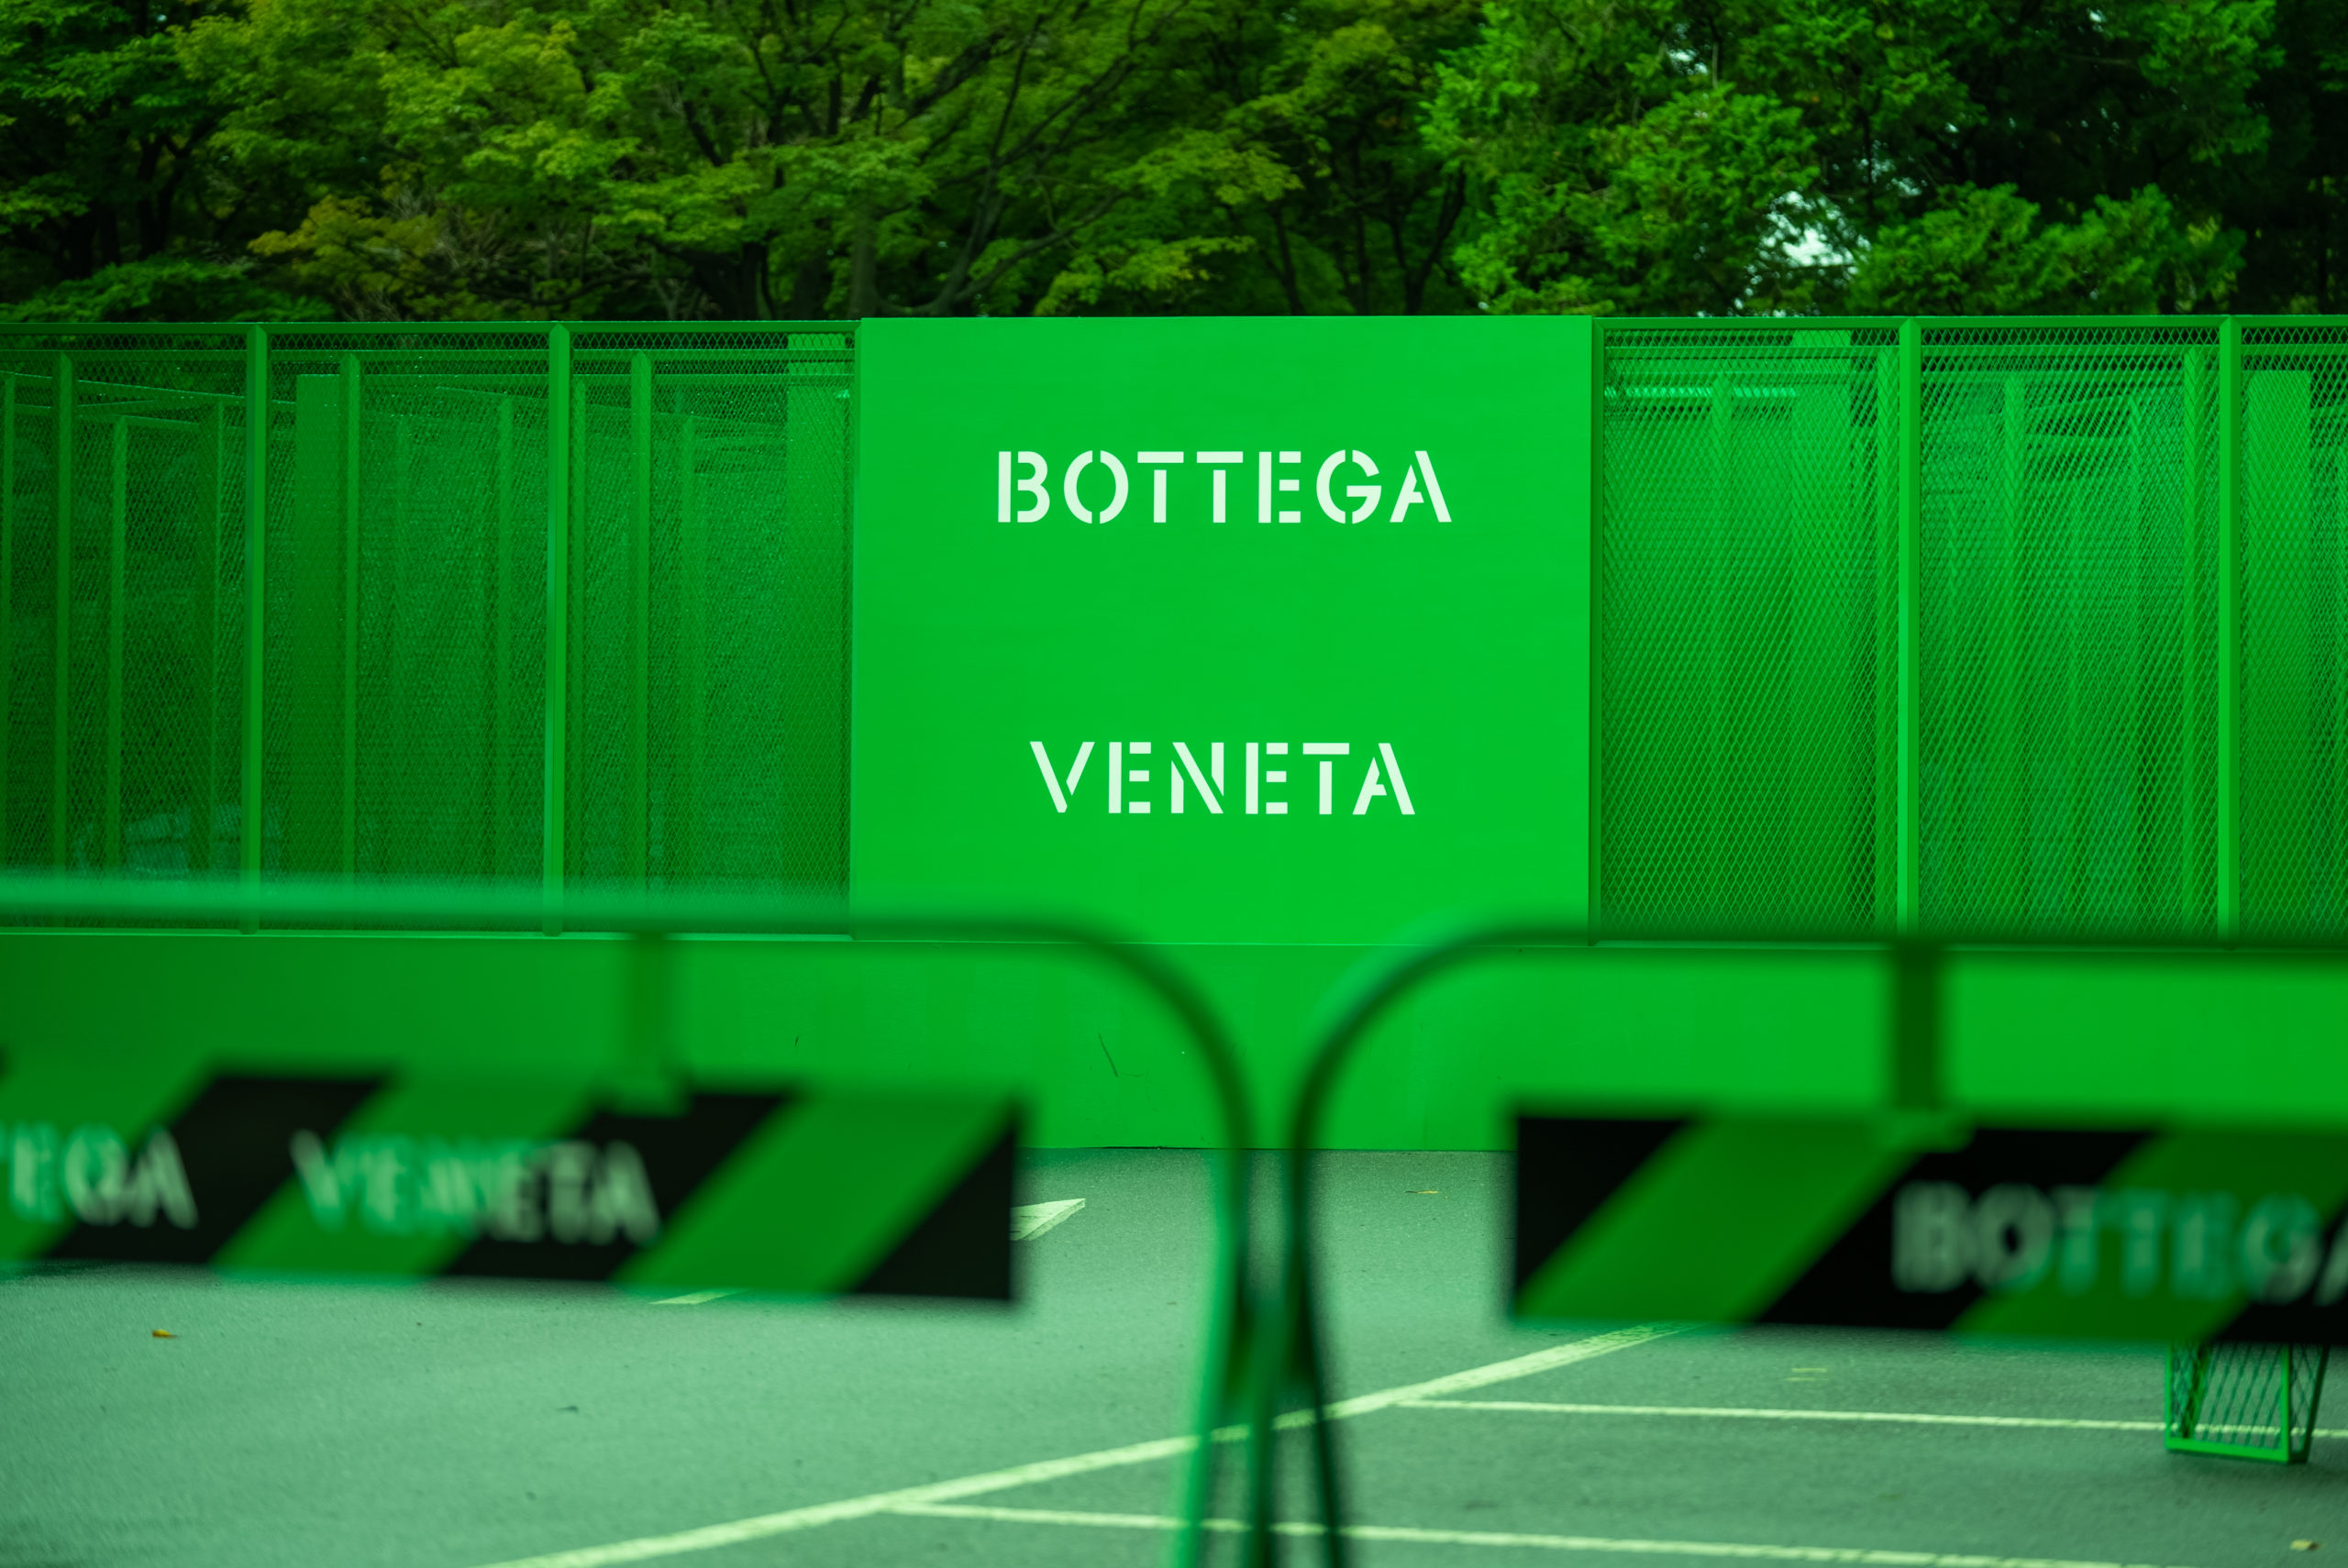 explore bottega veneta's immersive, green MAZE installation in